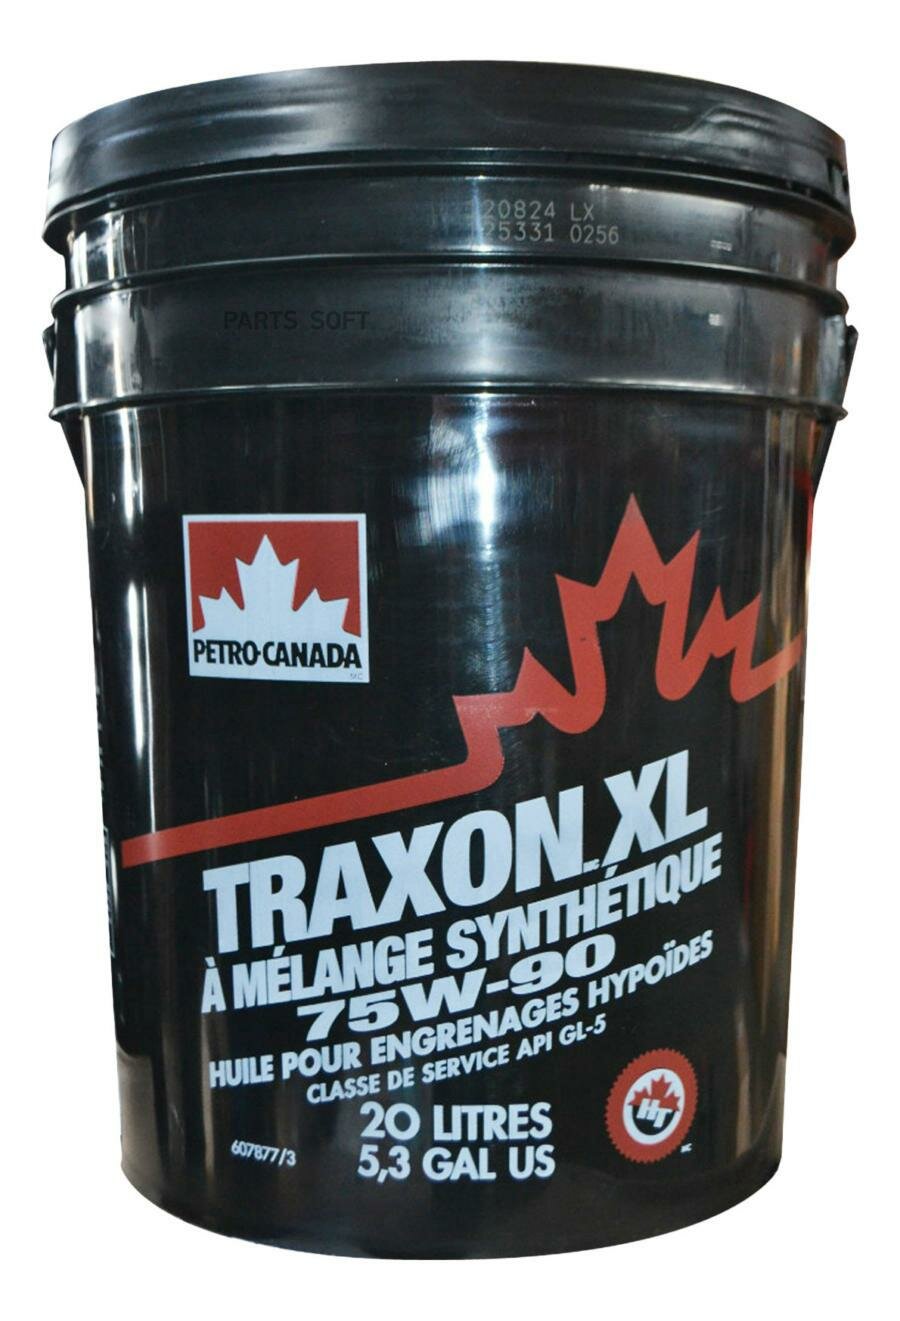 PETRO-CANADA TRXL759P20 Petro Canada TRAXON XL Synthetic Blend 75W-90 п/с (20л)